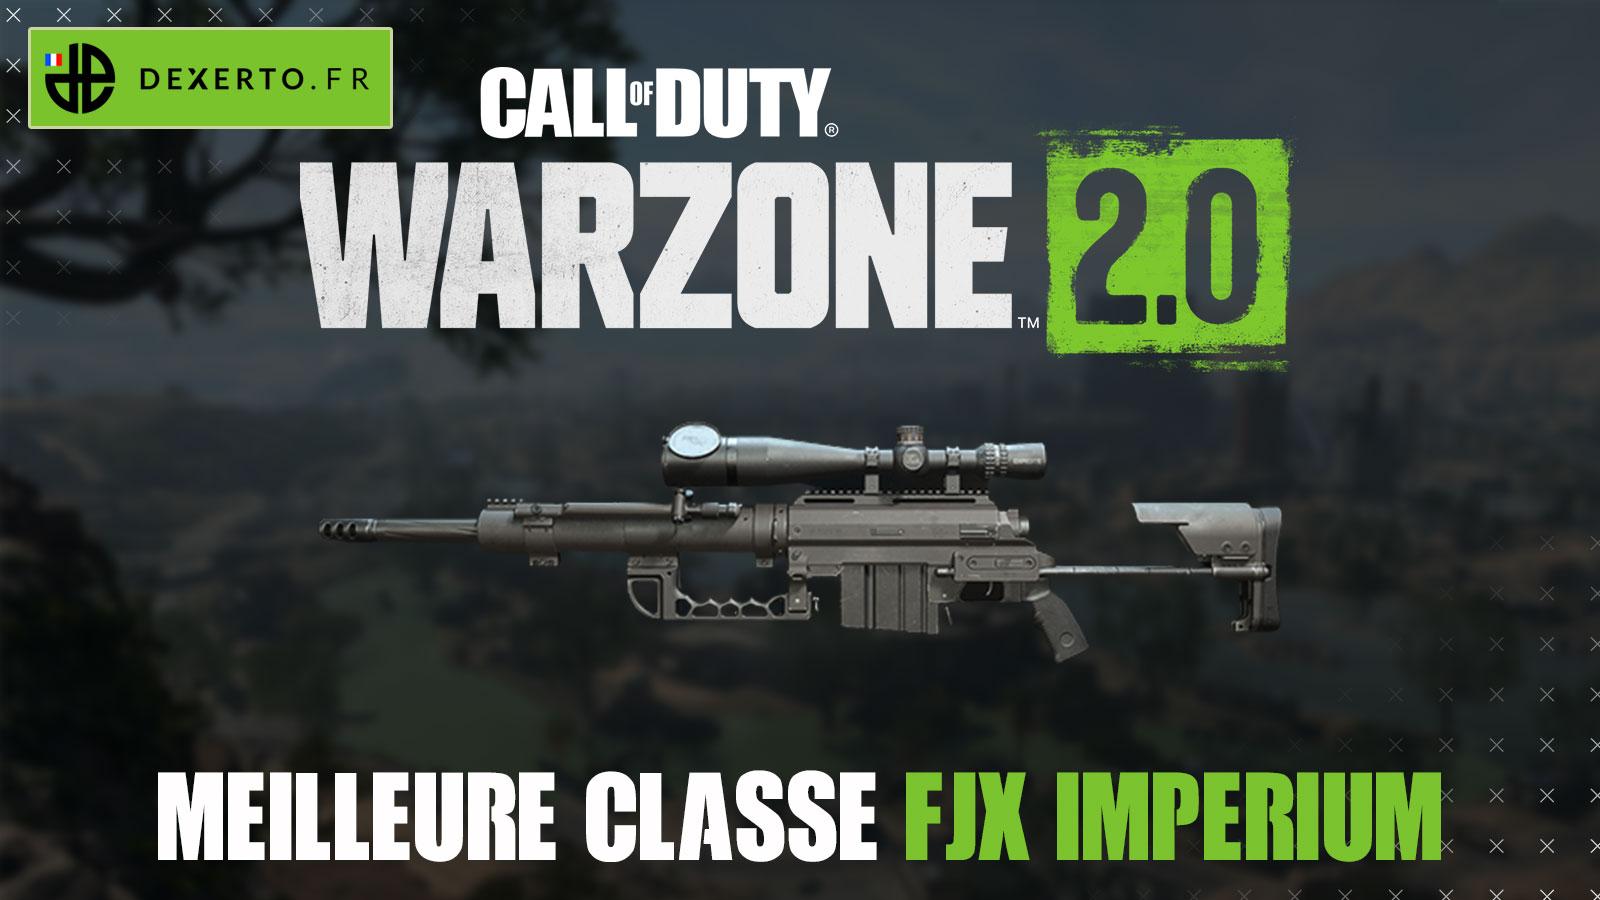 FJX Imperium meilleure classe Warzone 2